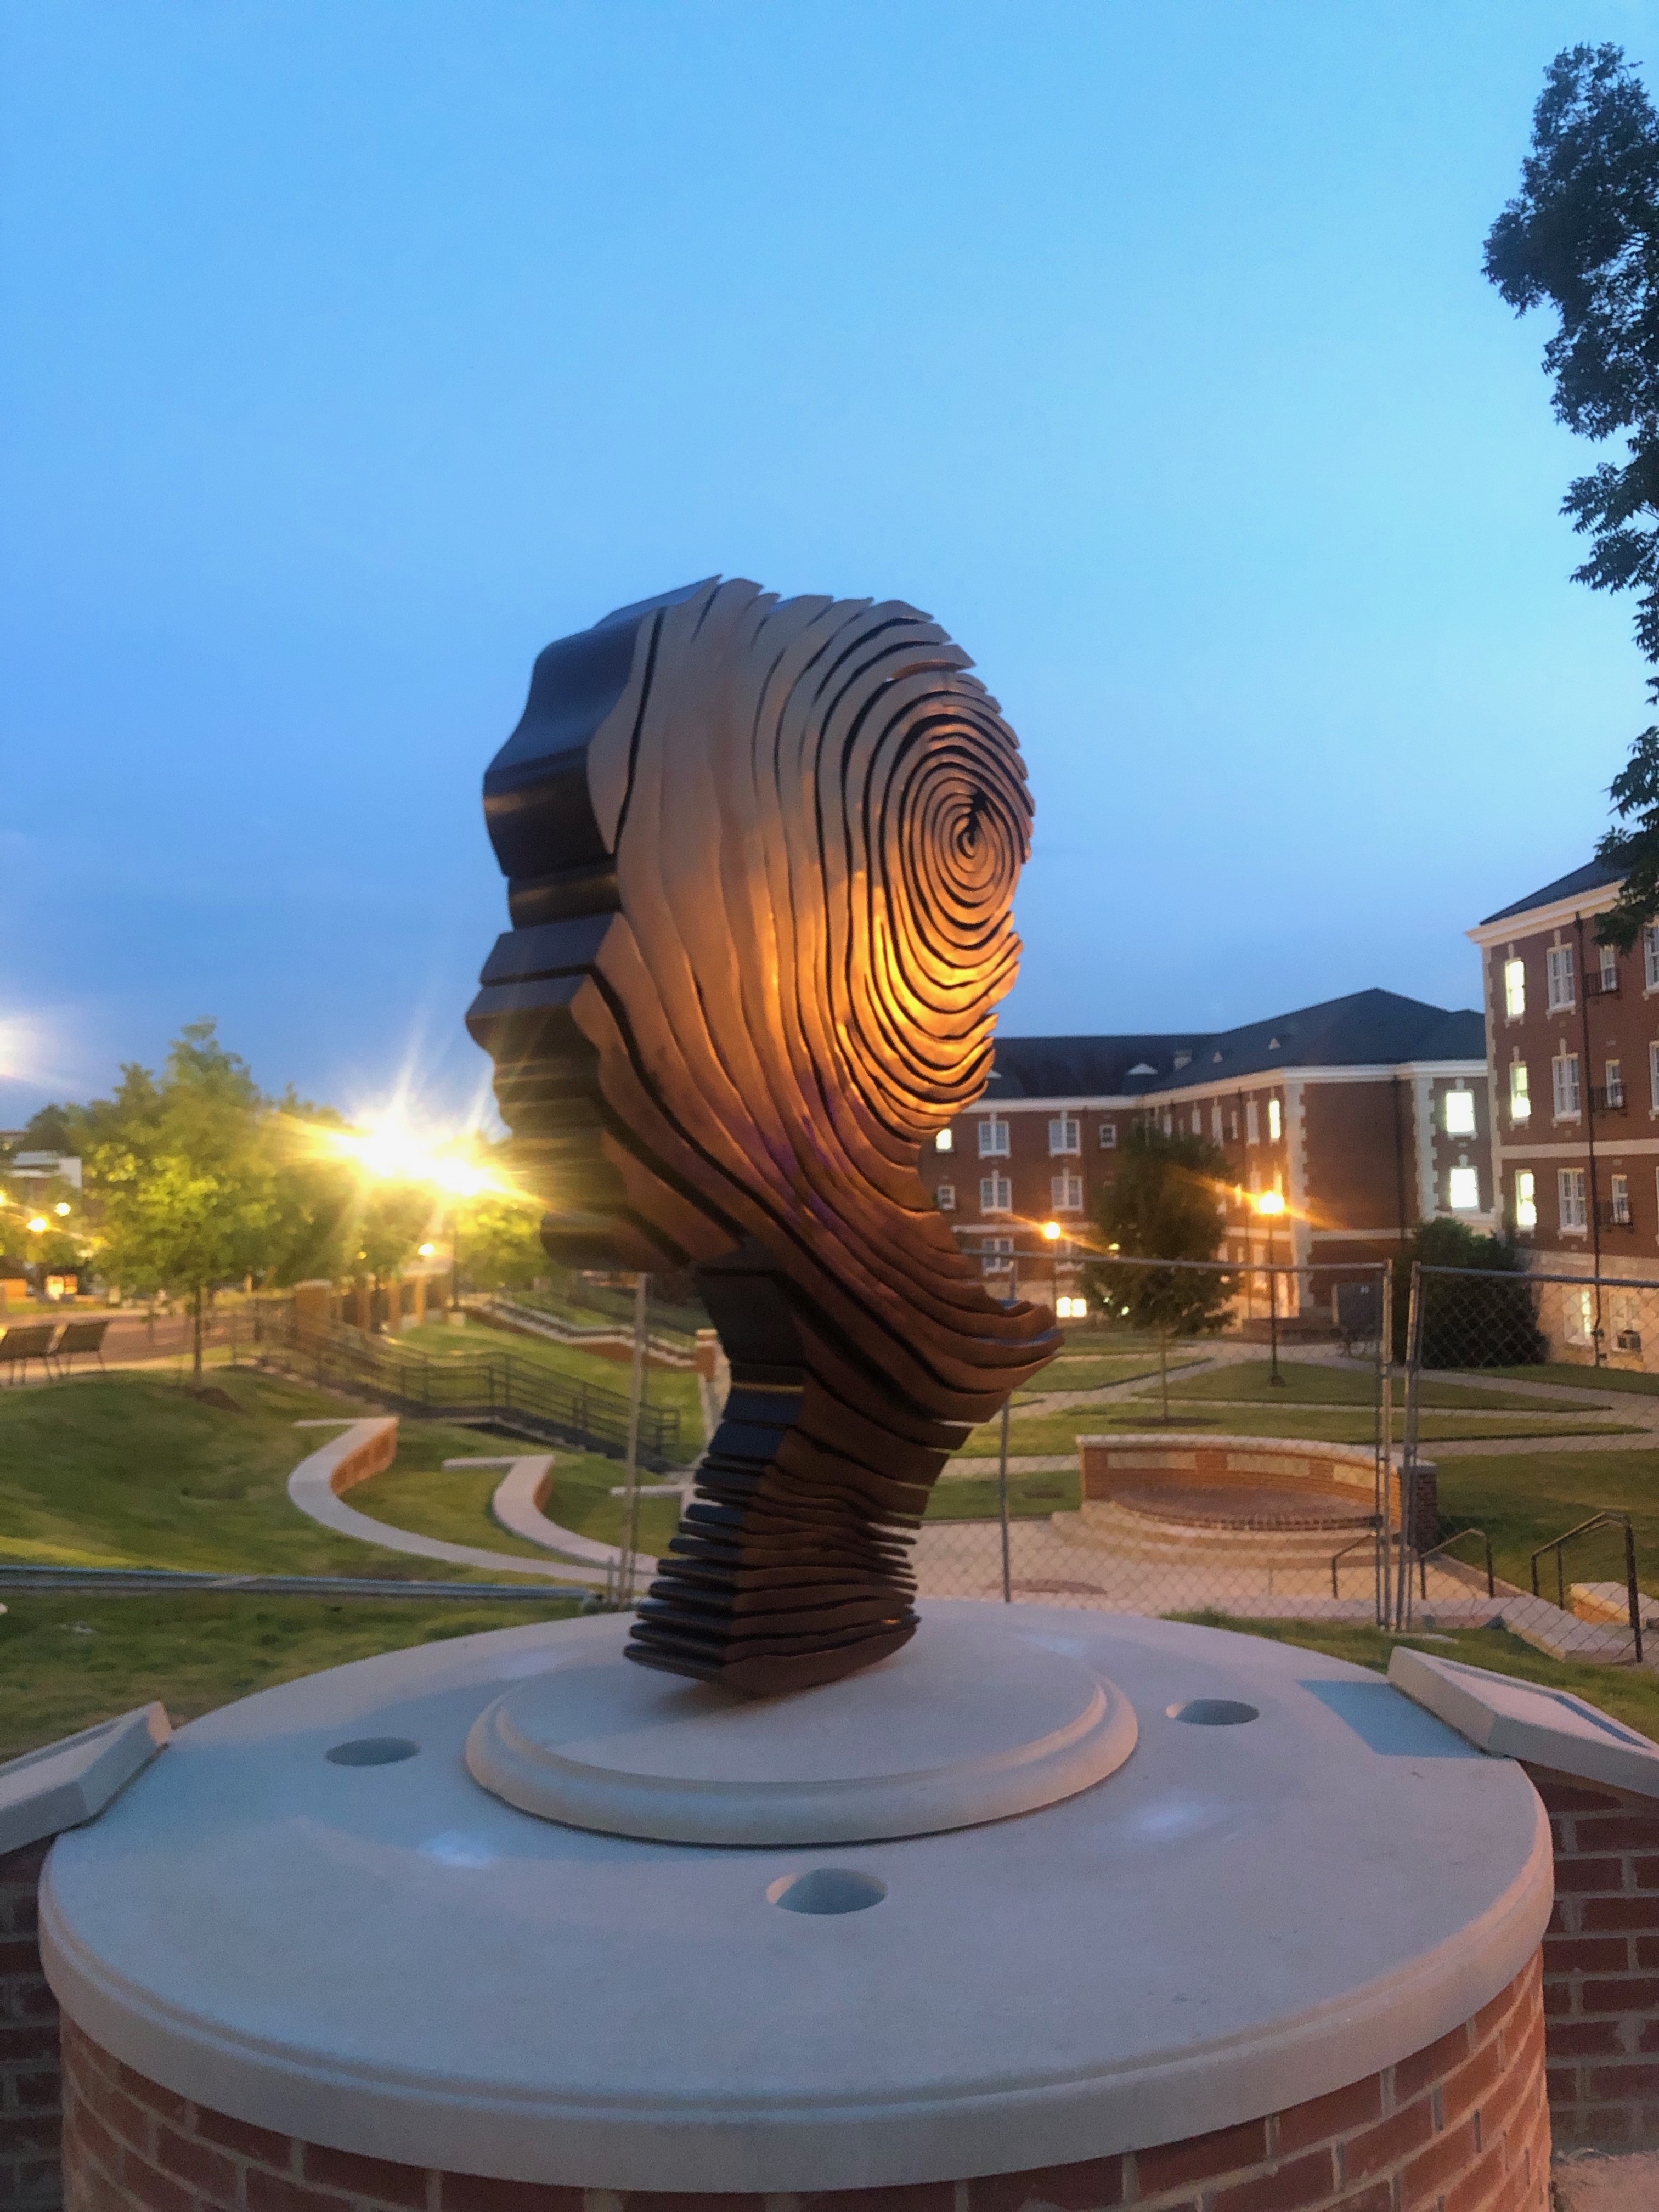 Auburn Lady Sculpture Evokes Past, Inspires Future Female Scholars